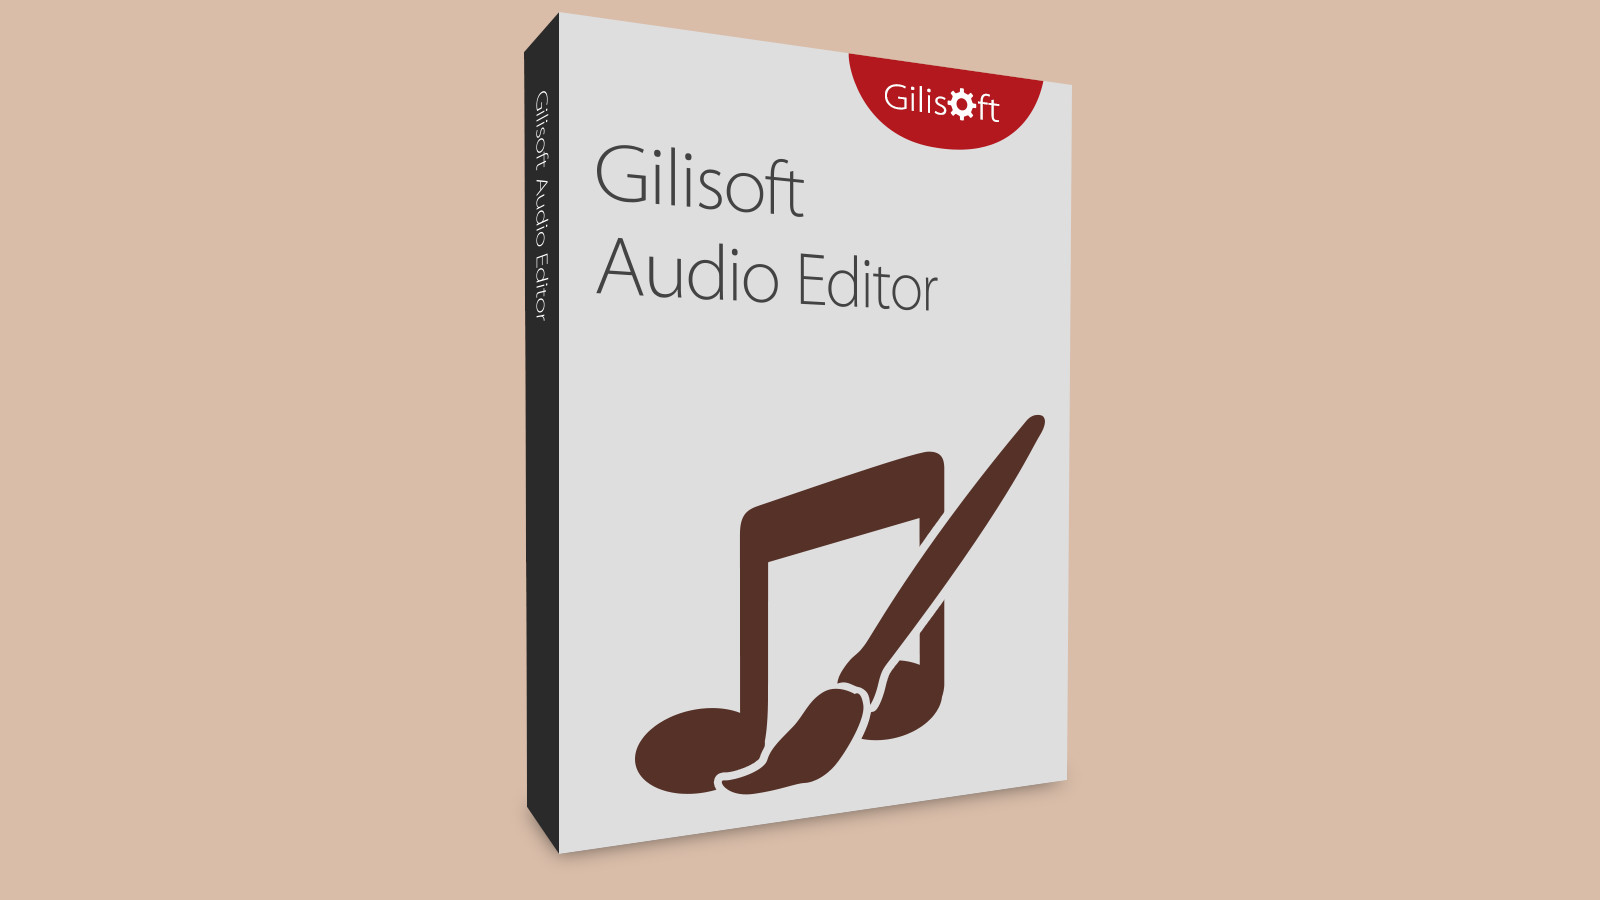 Gilisoft Audio Editor CD Key 16.5 usd